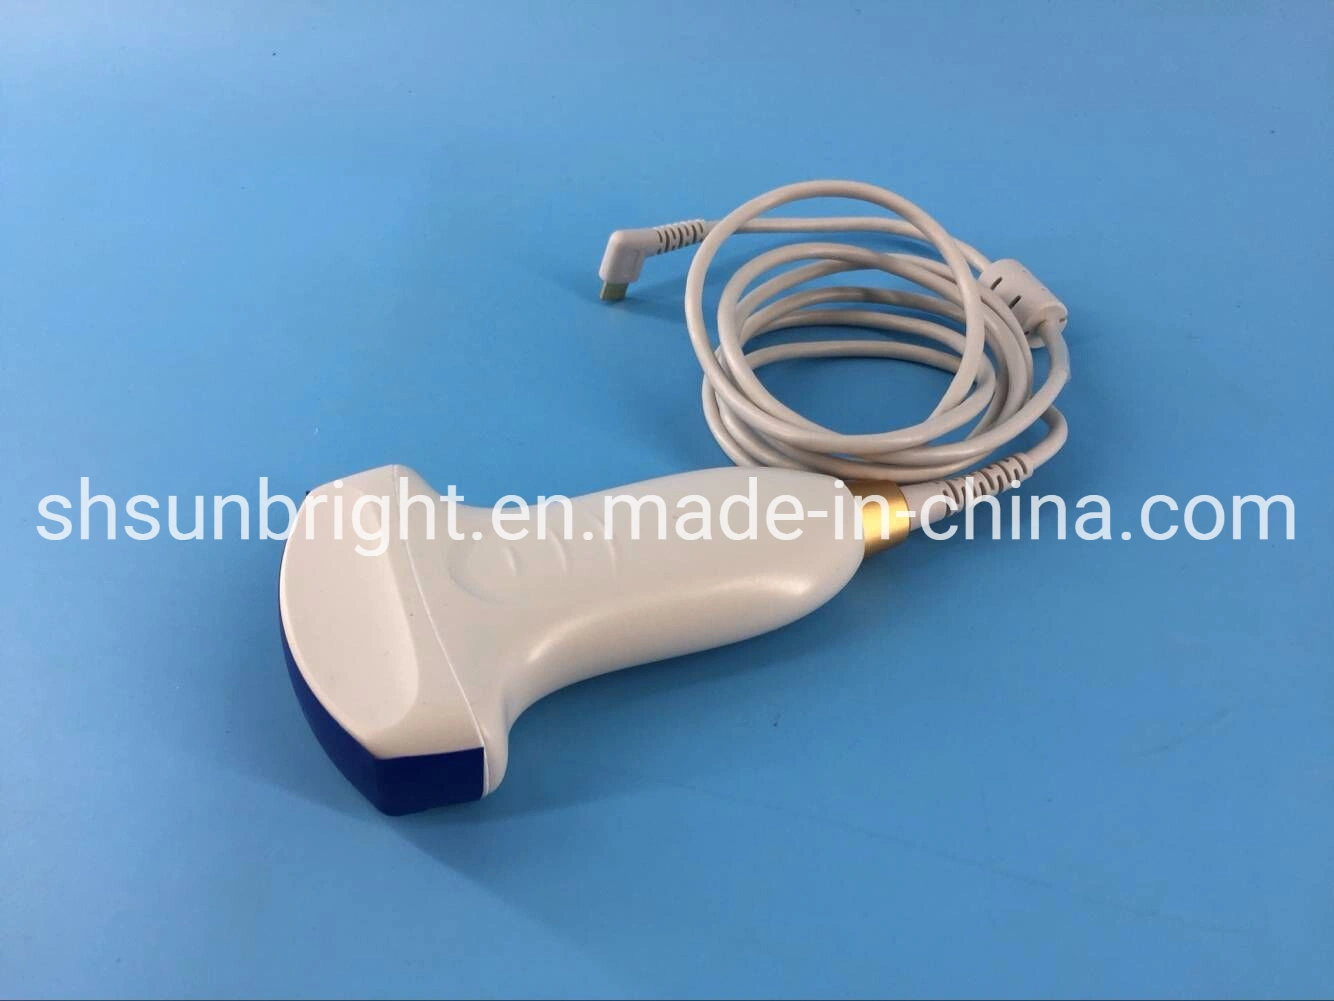 Digital Hand Held USB Convex Probe Ultrasound Sun-P1